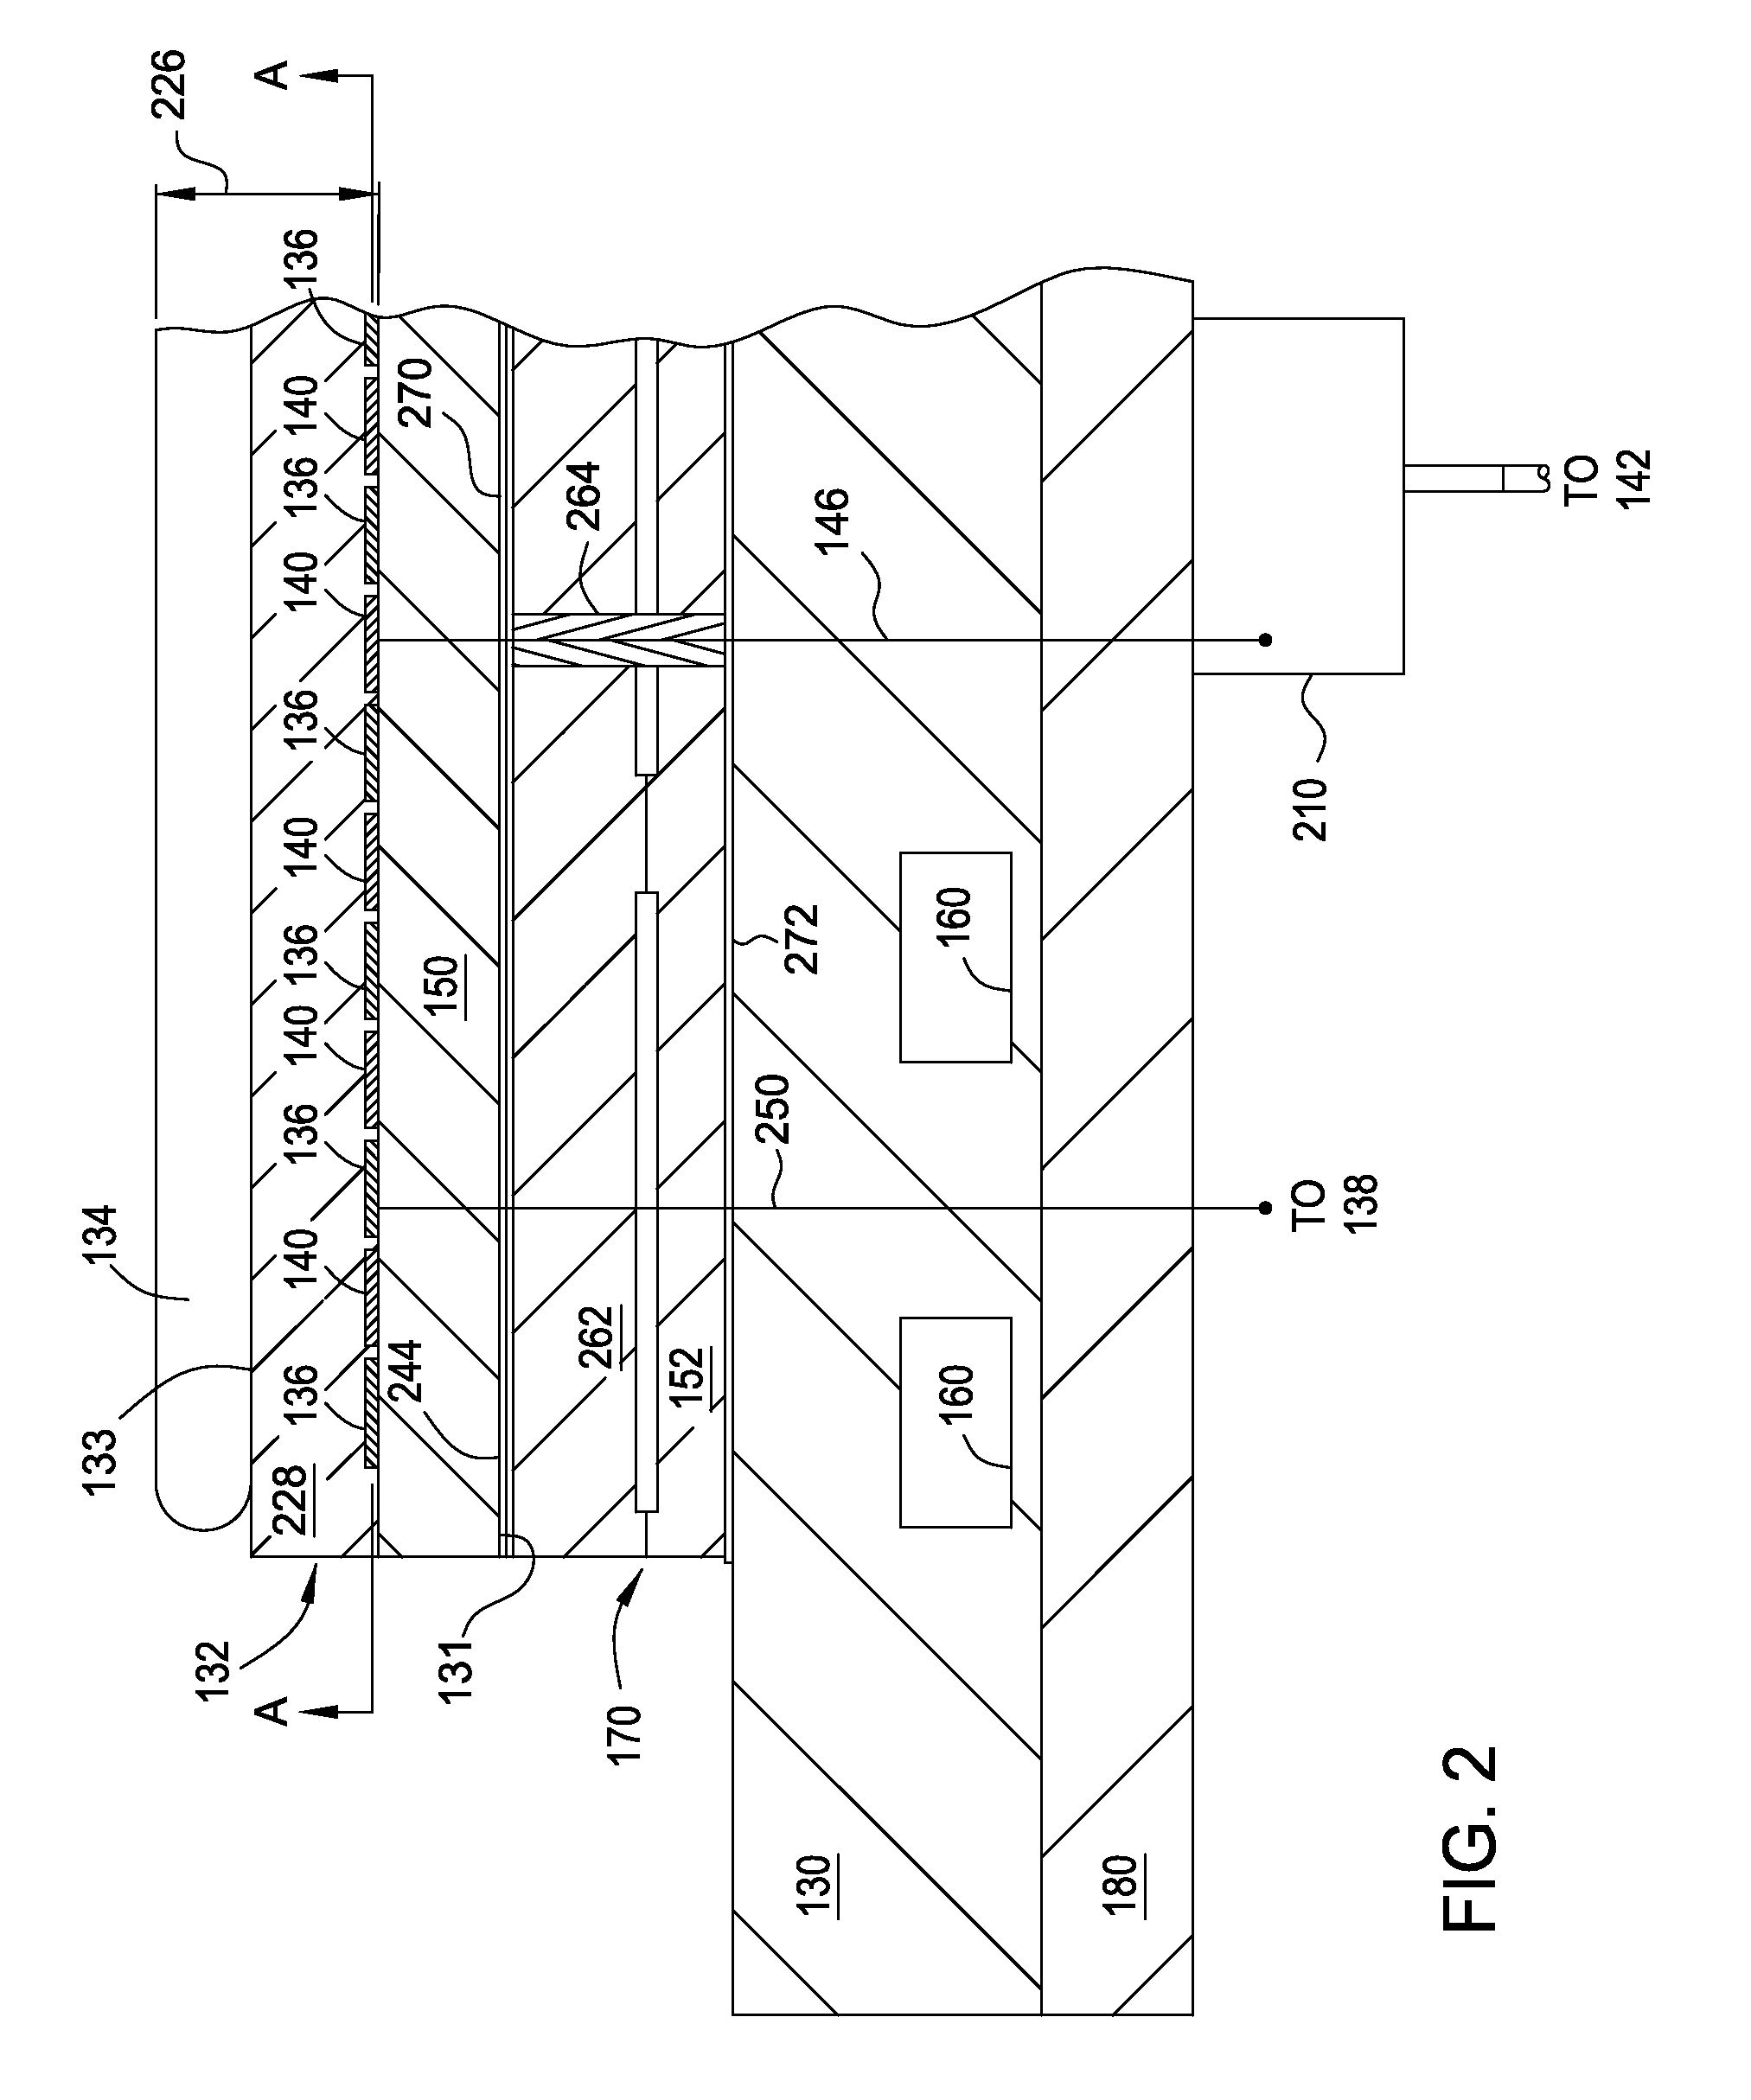 Pixelated capacitance controlled ESC